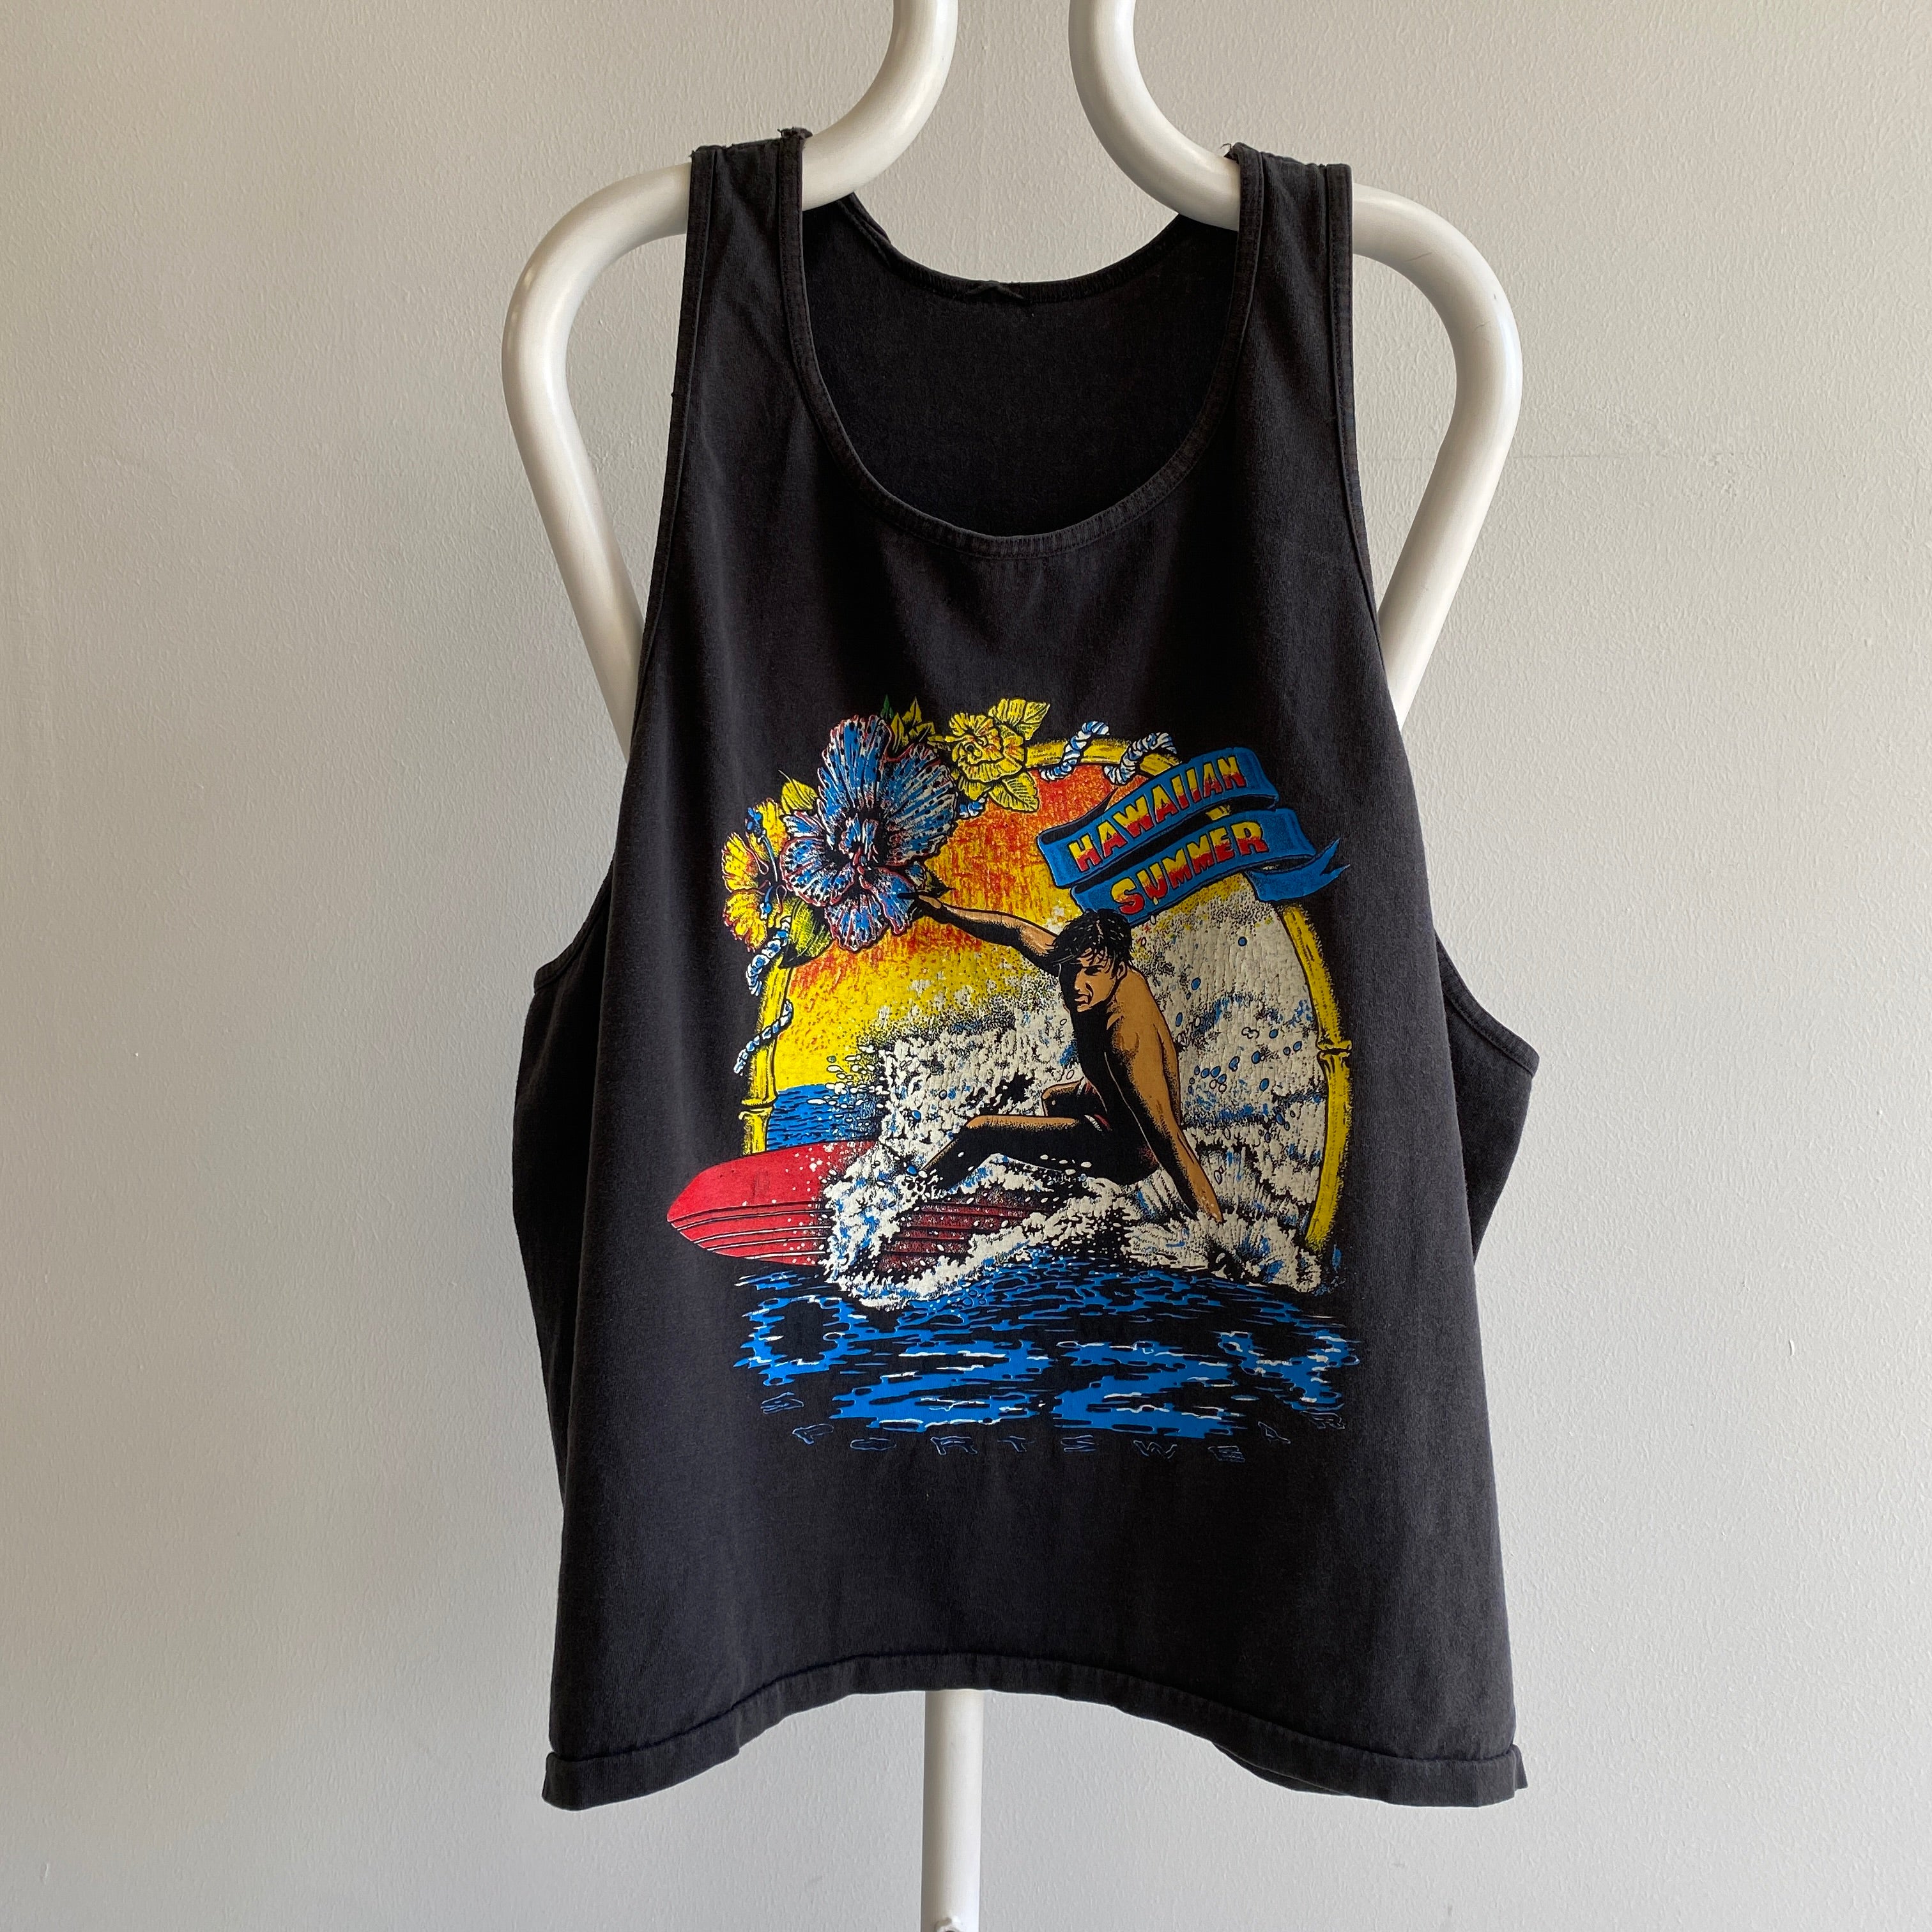 1980s Hawaiian Summer by Sportswear - Larger Graphic Surfer Tank Top